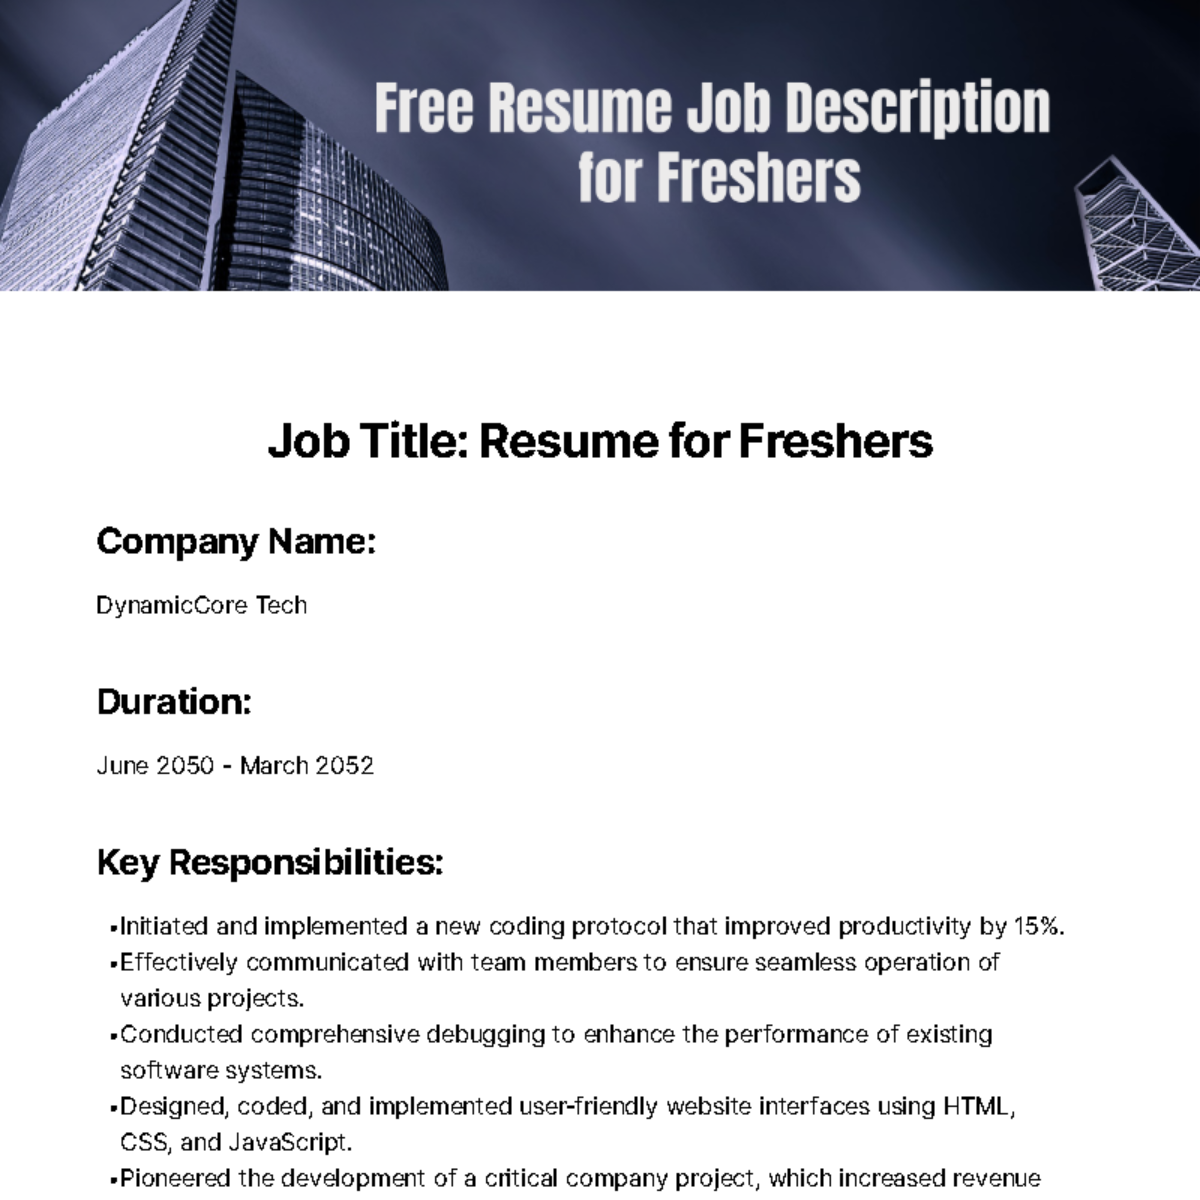 Resume Job Description for Freshers Template